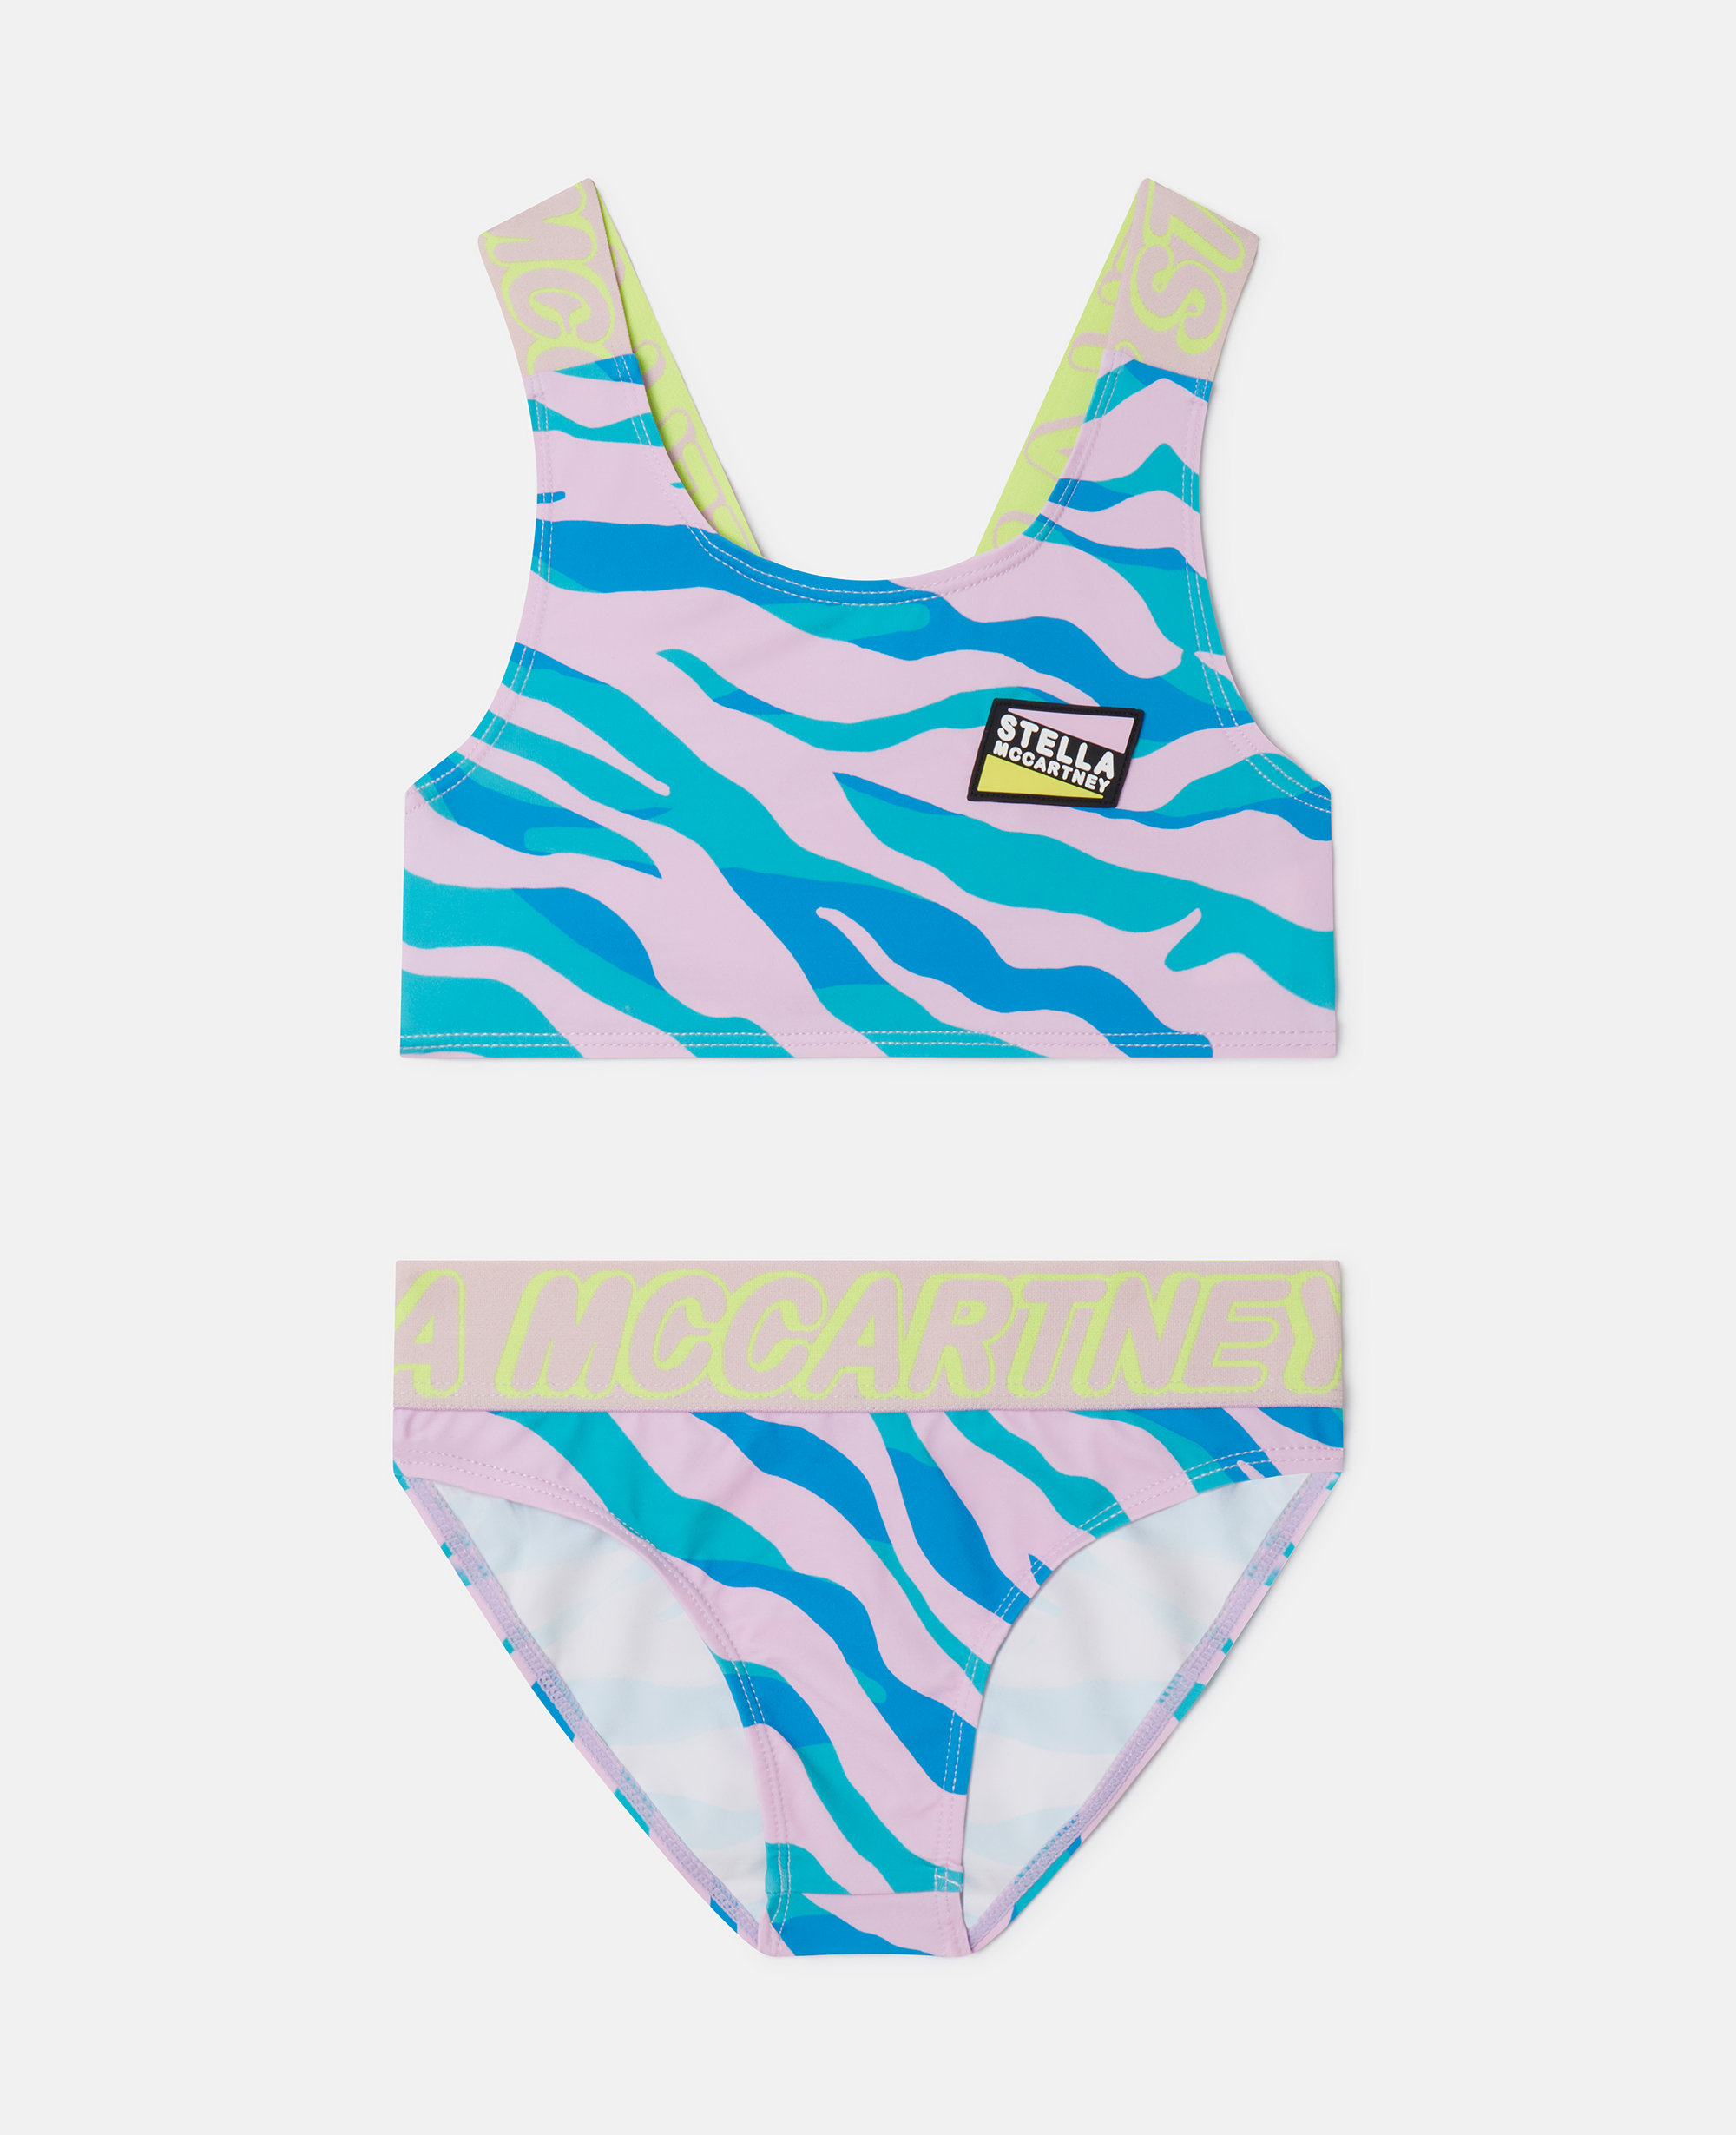 stella mccartney - zebra print bikini set, femme, blue multicolour, taille: 3